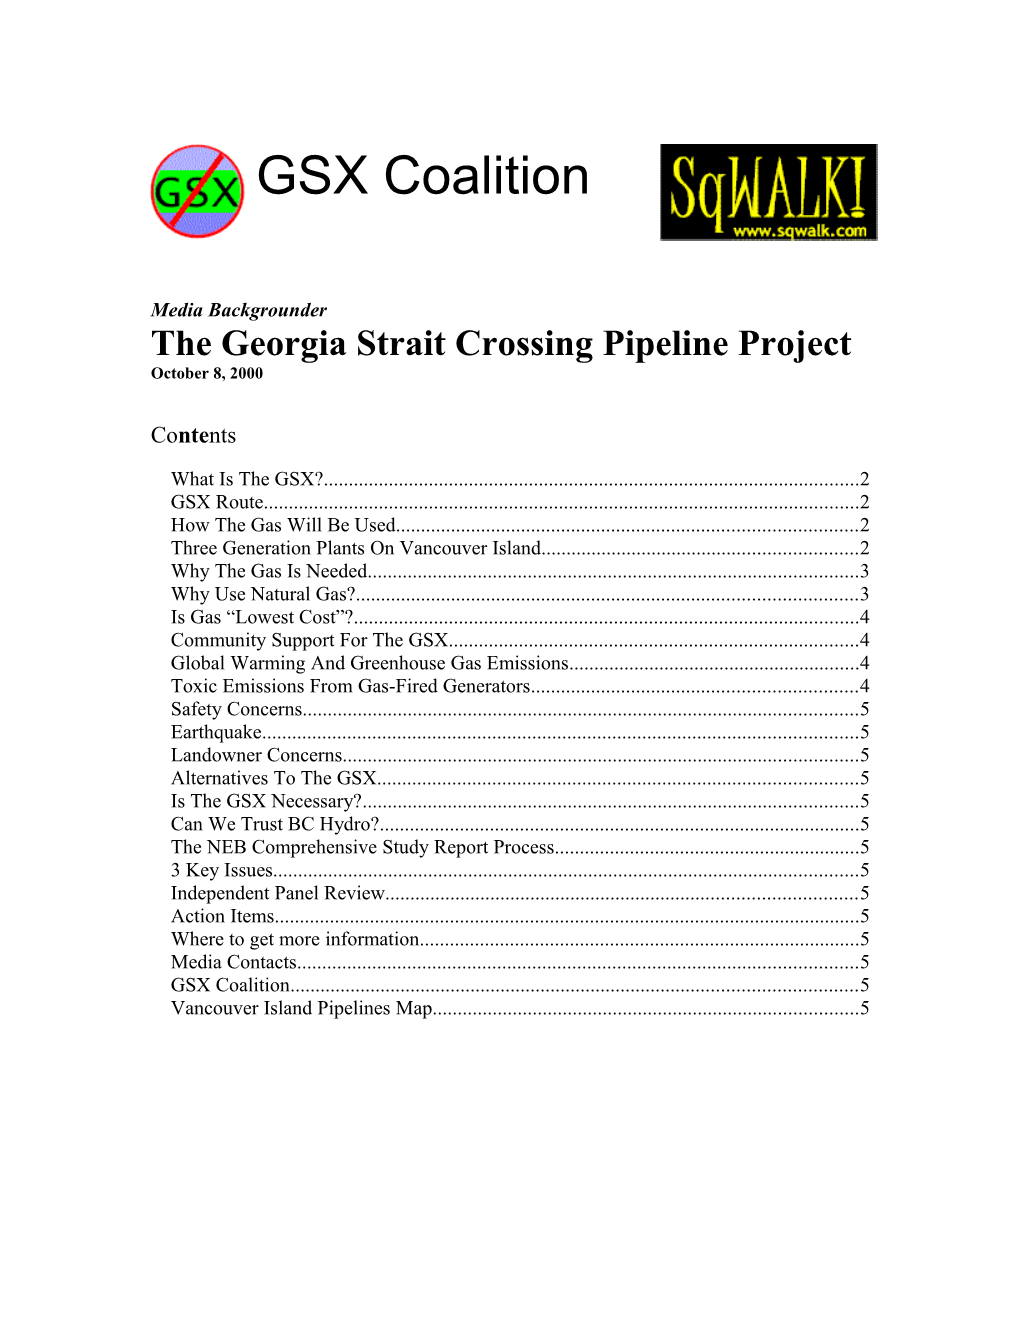 The Georgiastrait Crossing Pipeline Project